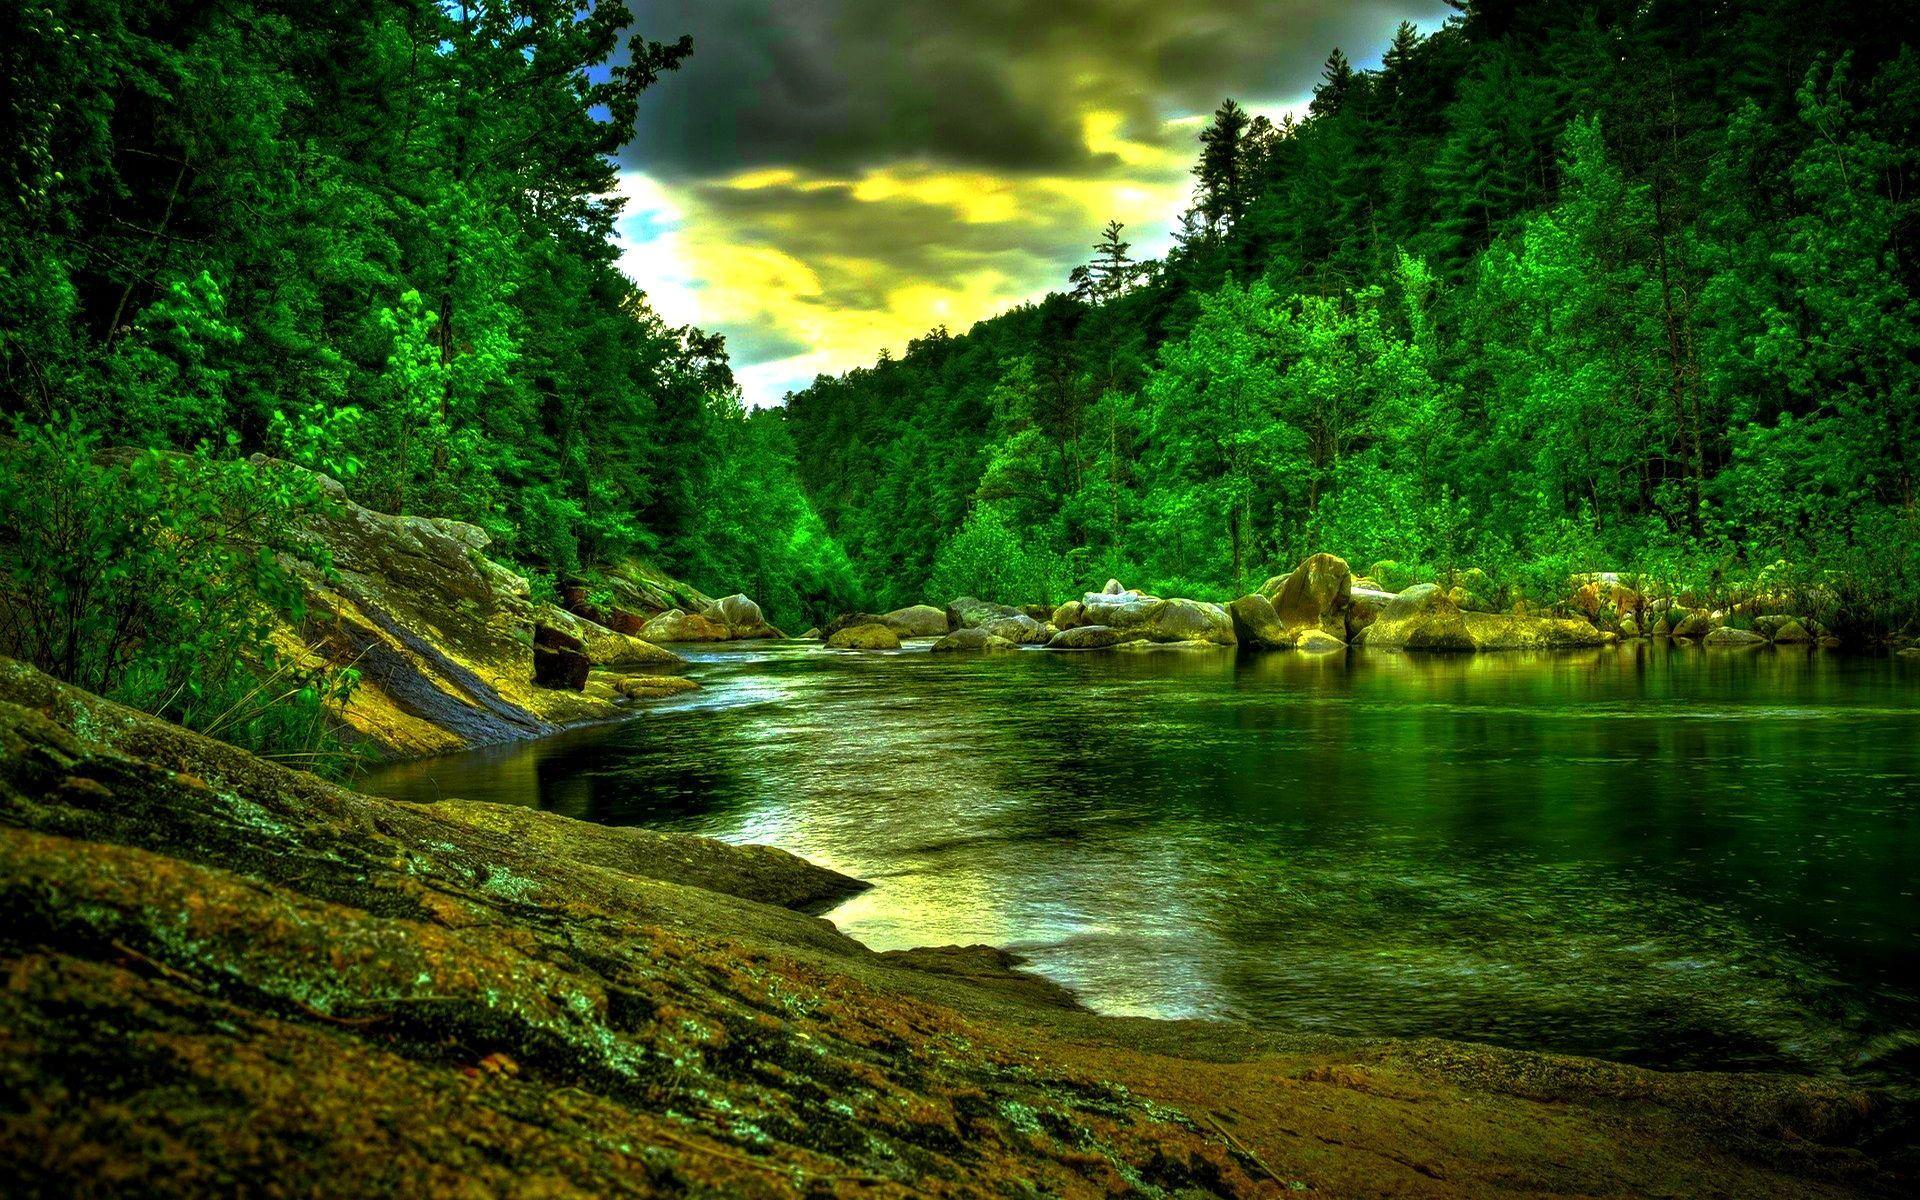 Jungle River Wallpaper, Full HD 1080p, Best HD Jungle River